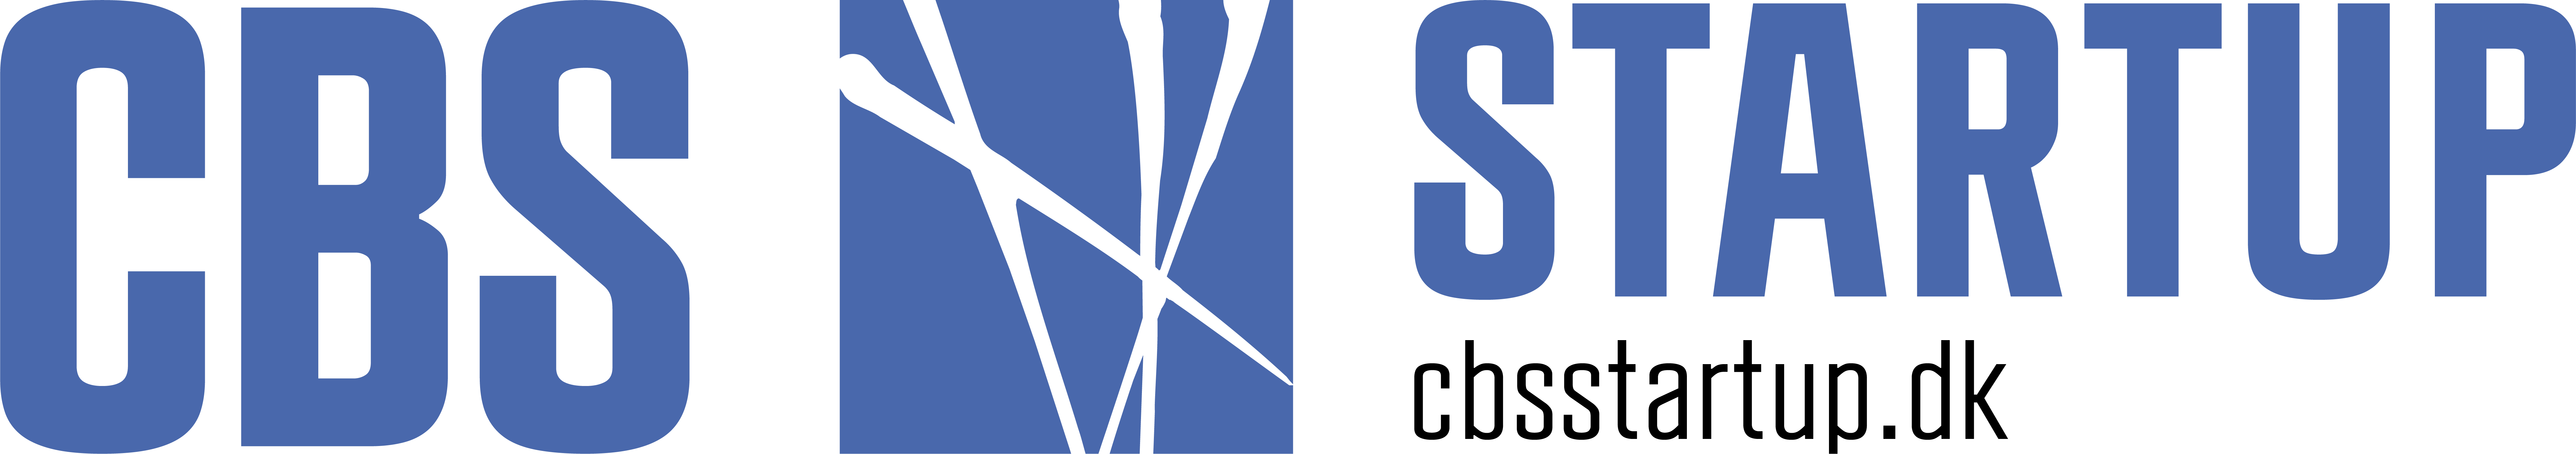 Copenhagen School of Entrepreneurship logo